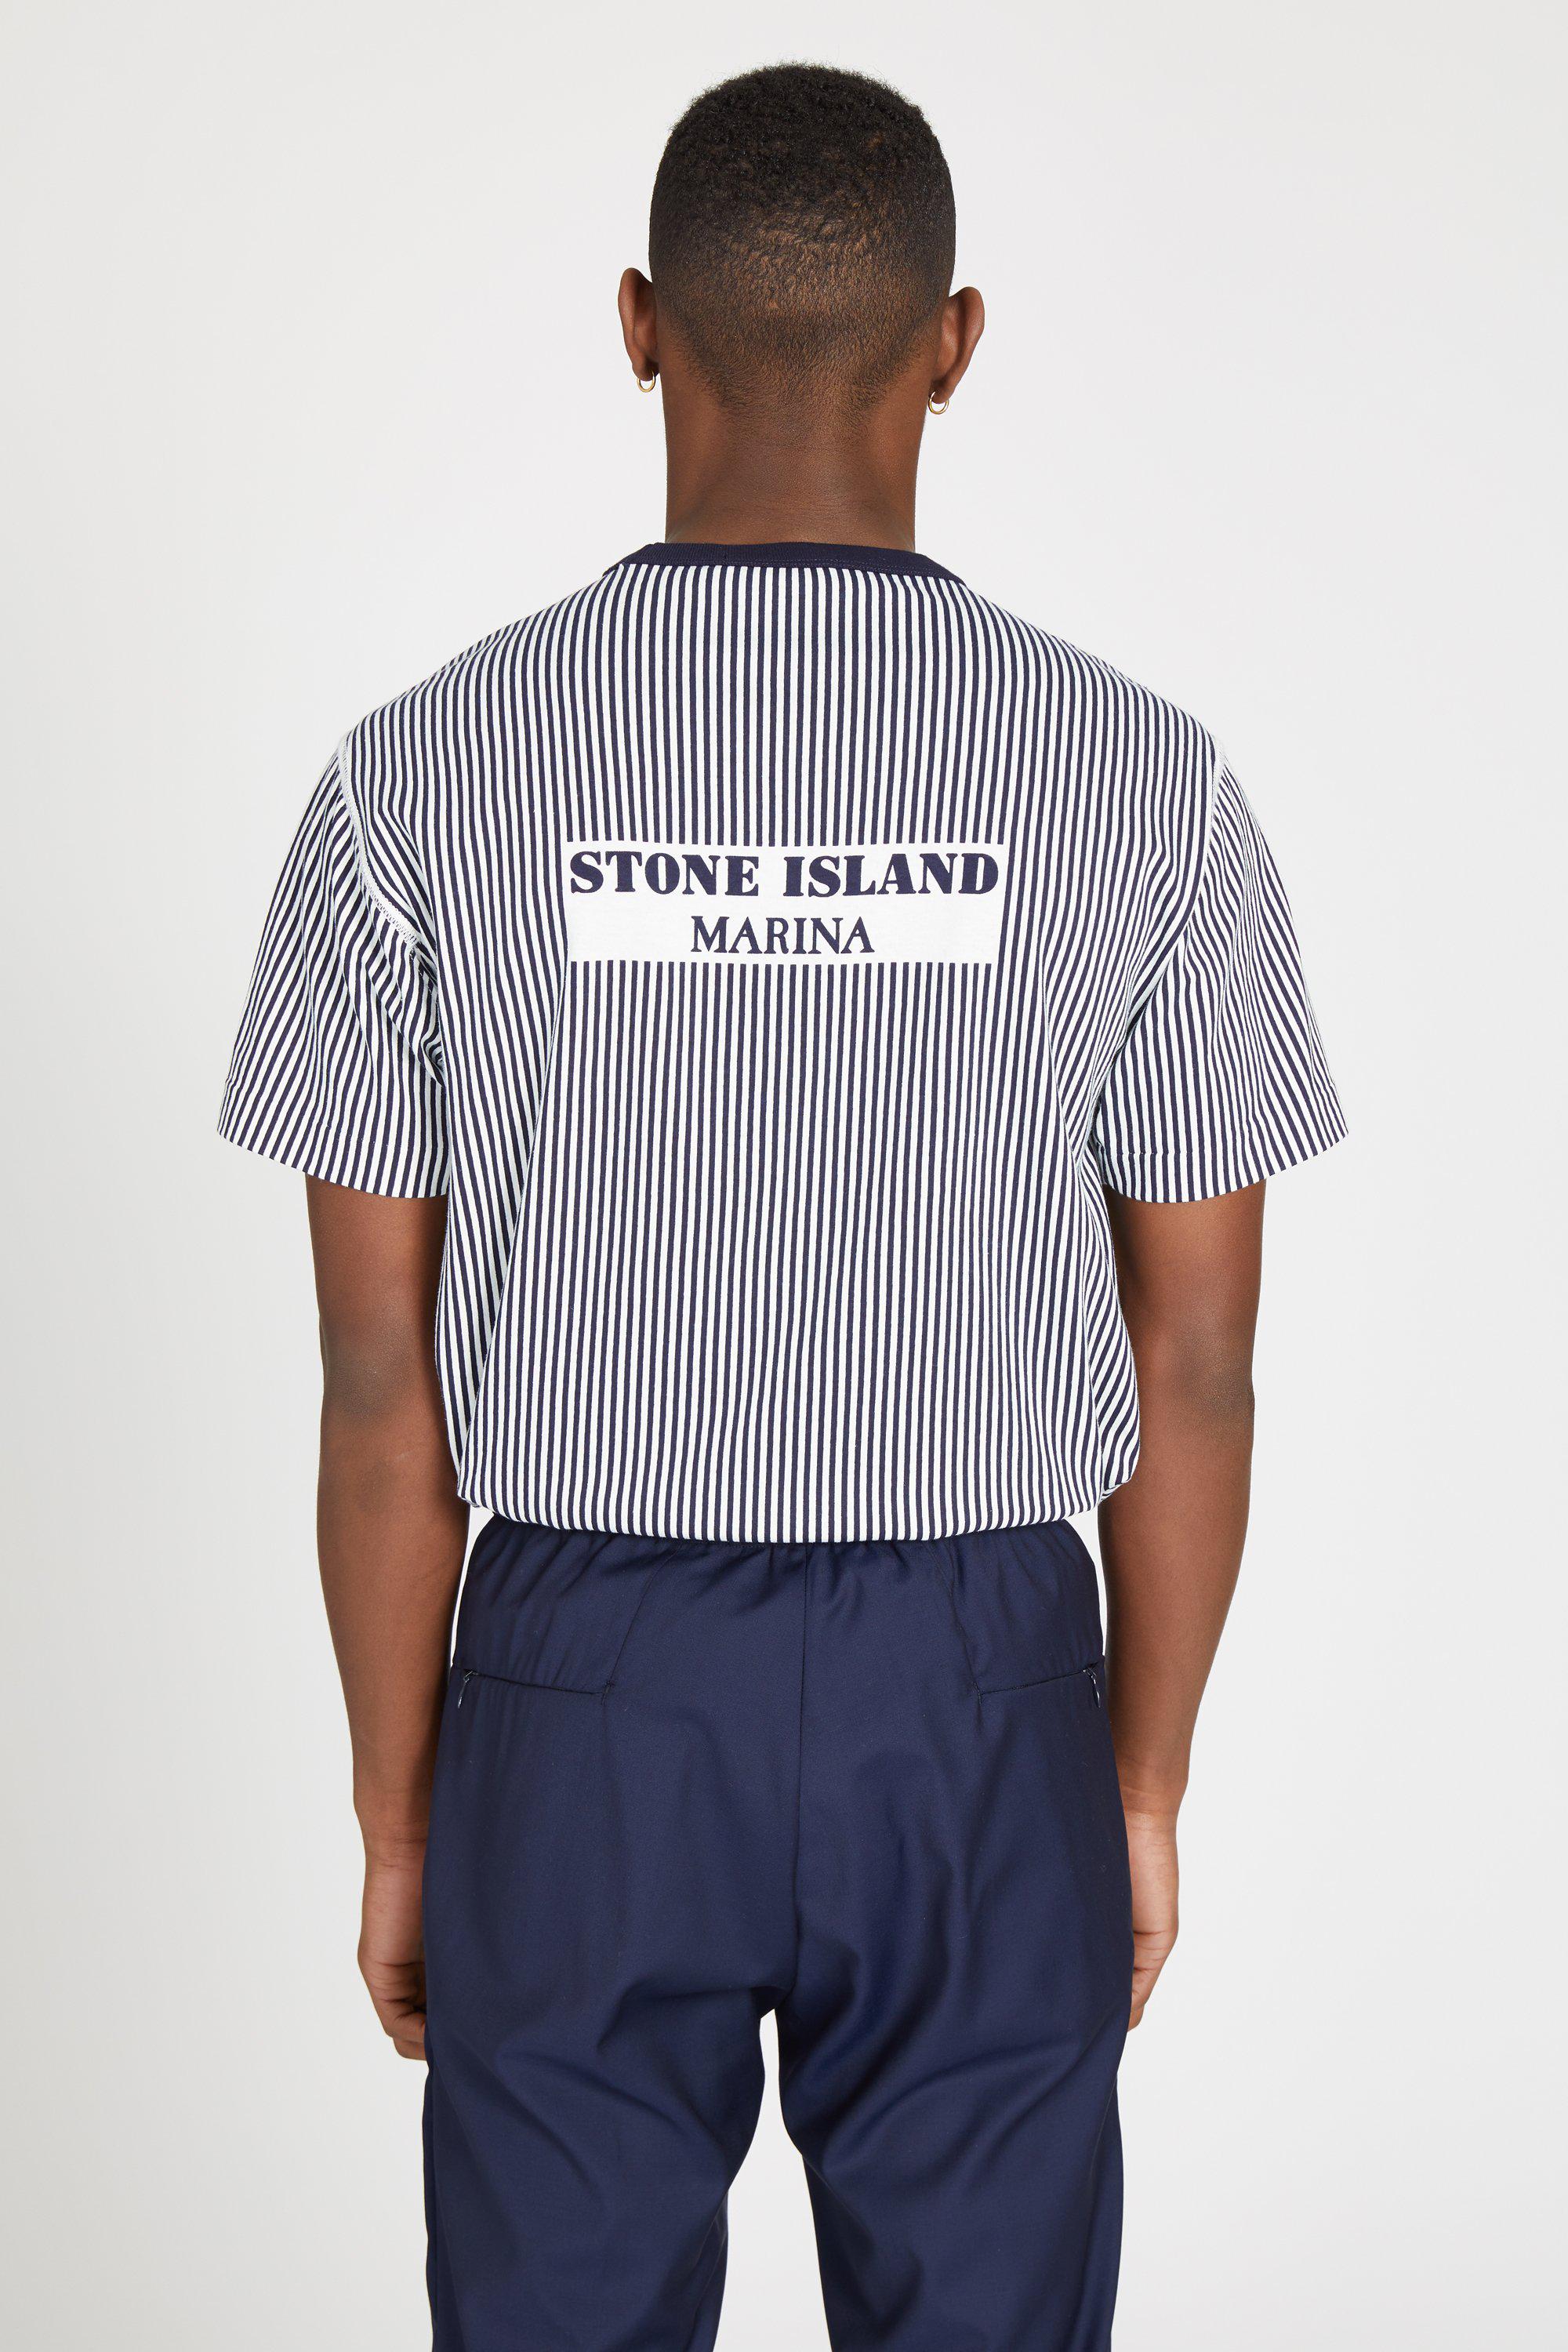 Stone Island 233x2 Marina Cotton Jersey Tshirt in Blue for Men - Lyst